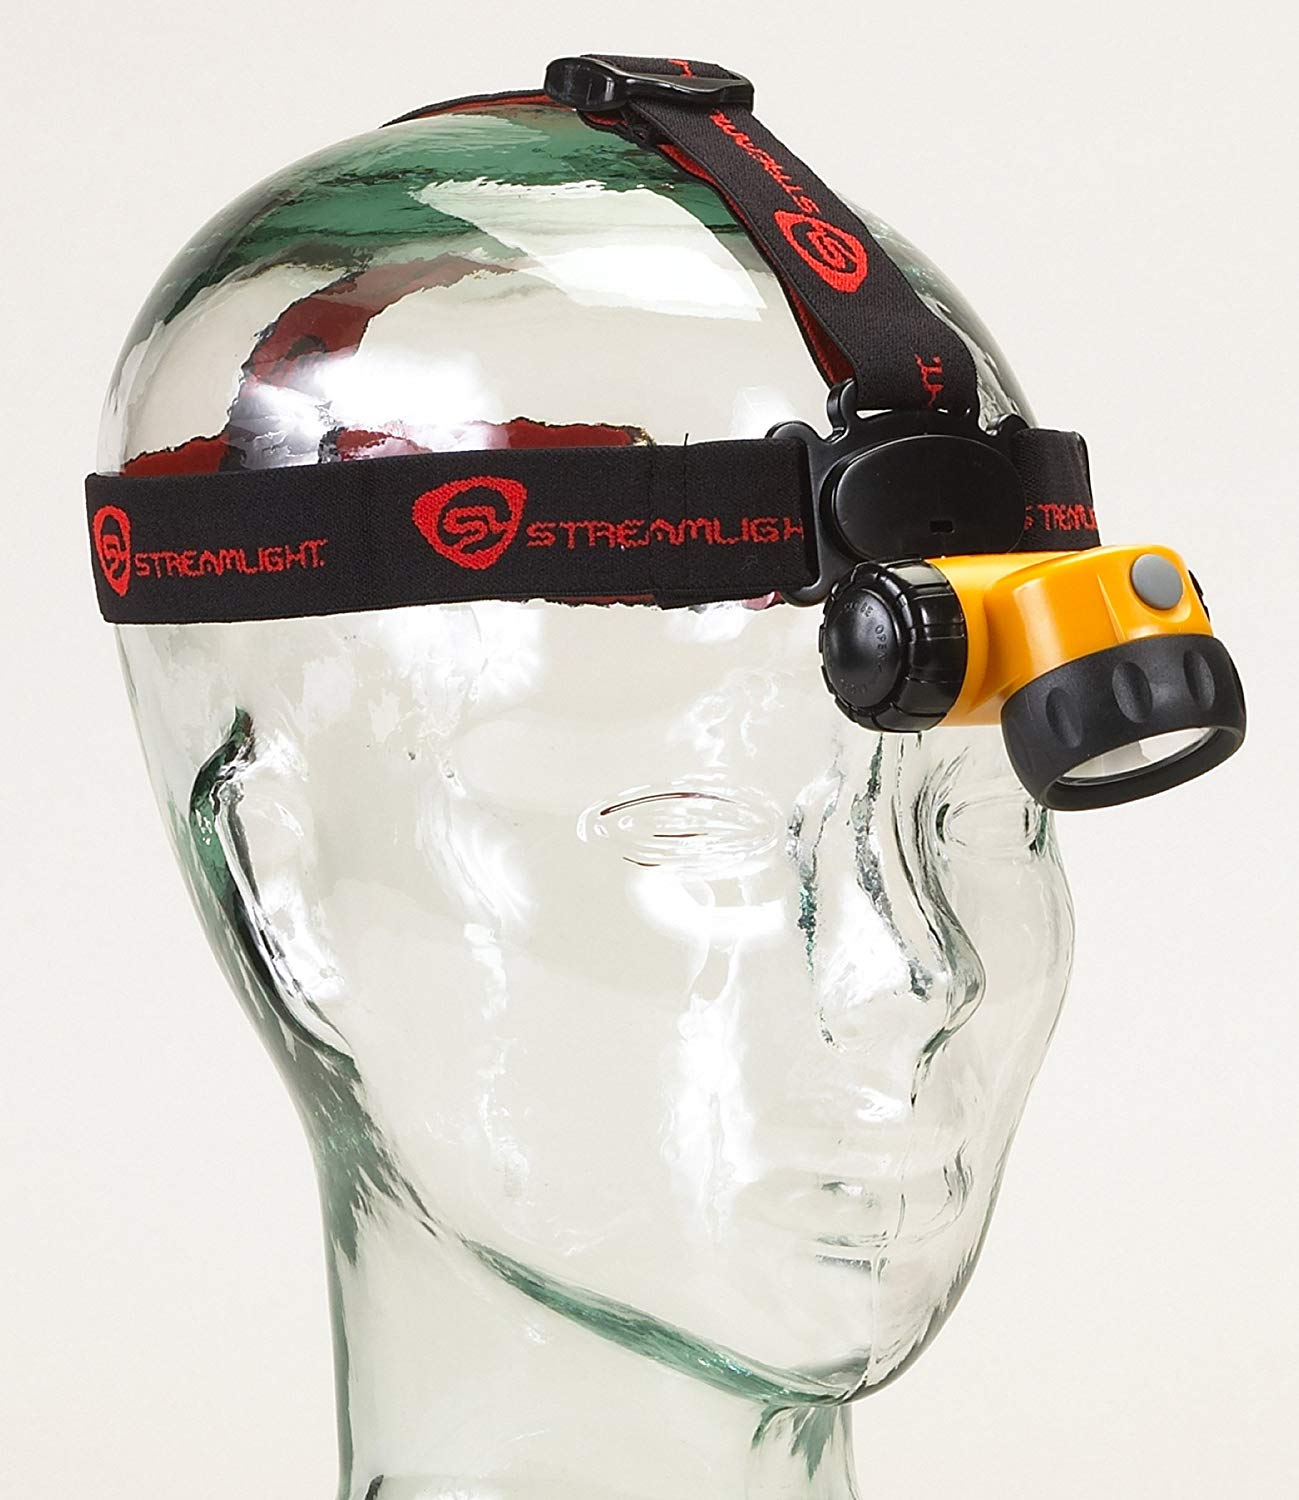 Streamlight 61301 Argo C4 LED Head Mount Headlamp. Yellow - 150 Lumens - MPR Tools & Equipment